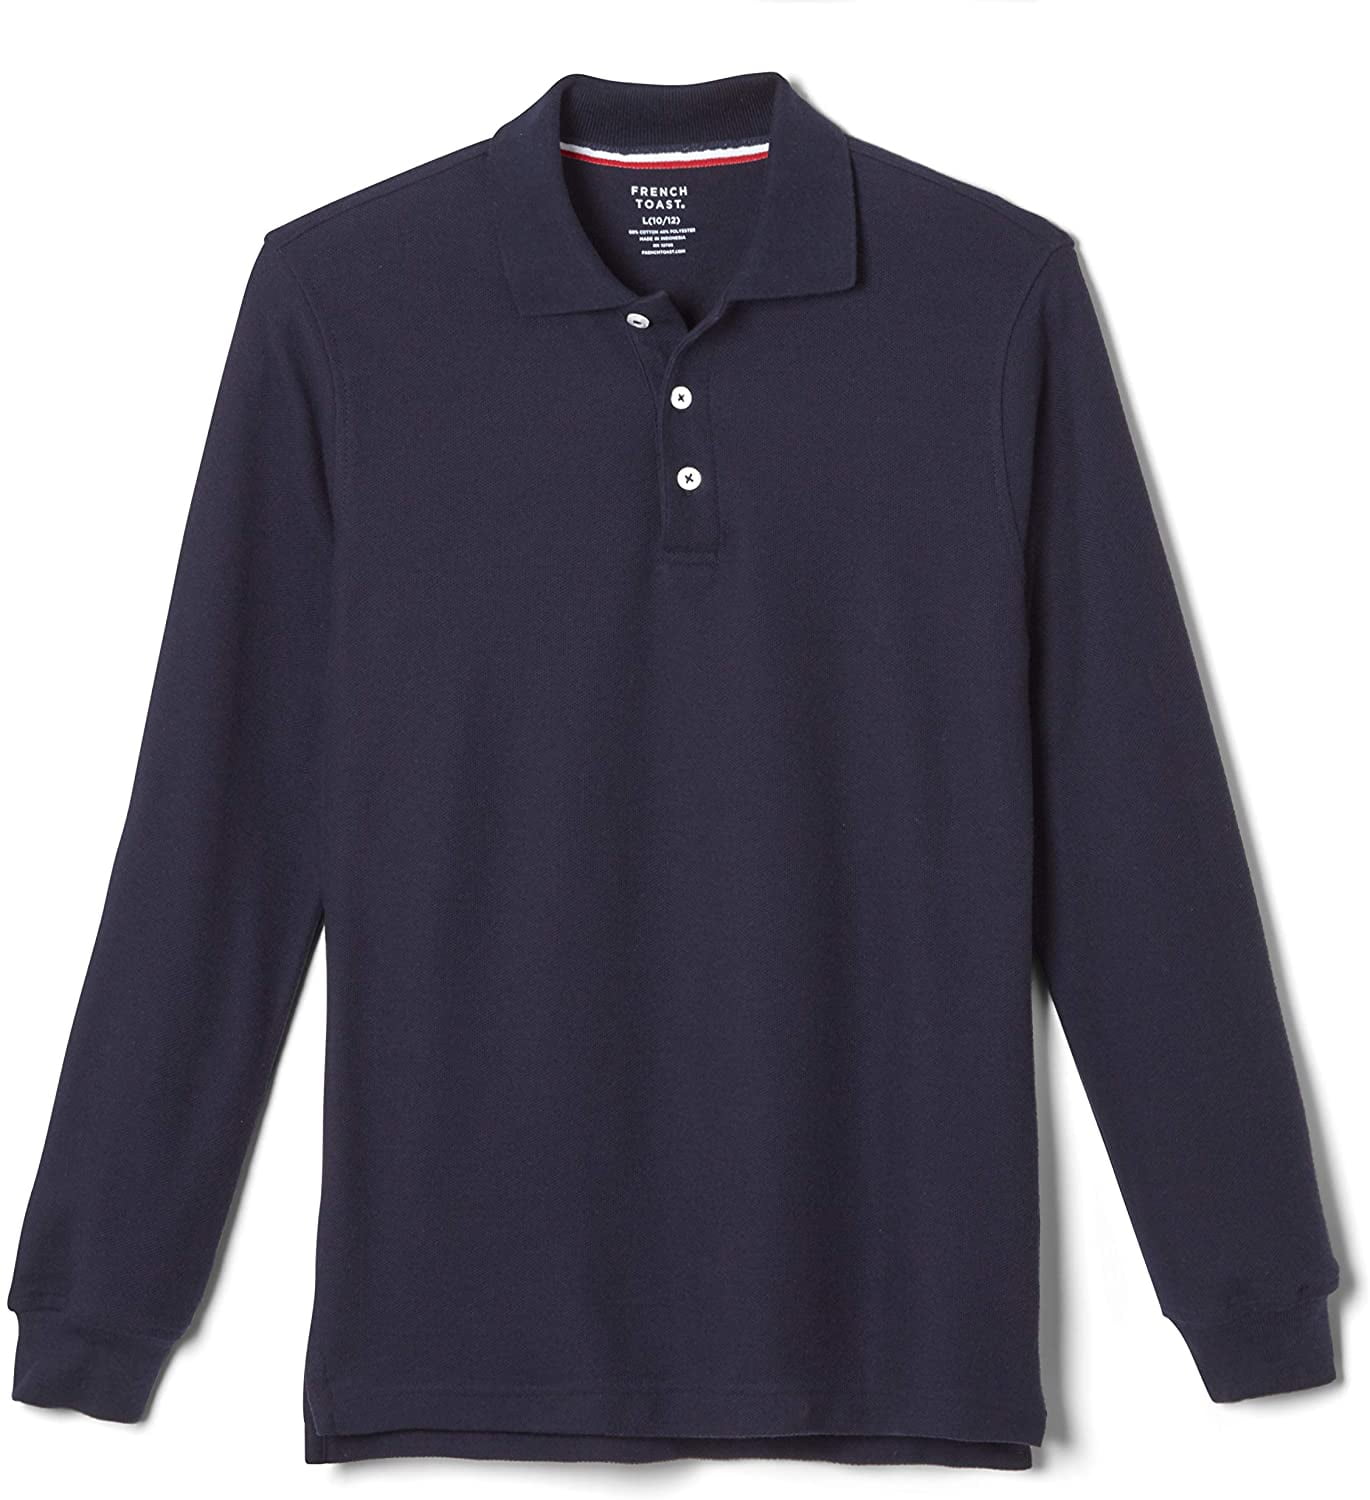 French Toast Boys' Long-Sleeve Pique Polo Shirt, Navy, Medium/10-12 ...